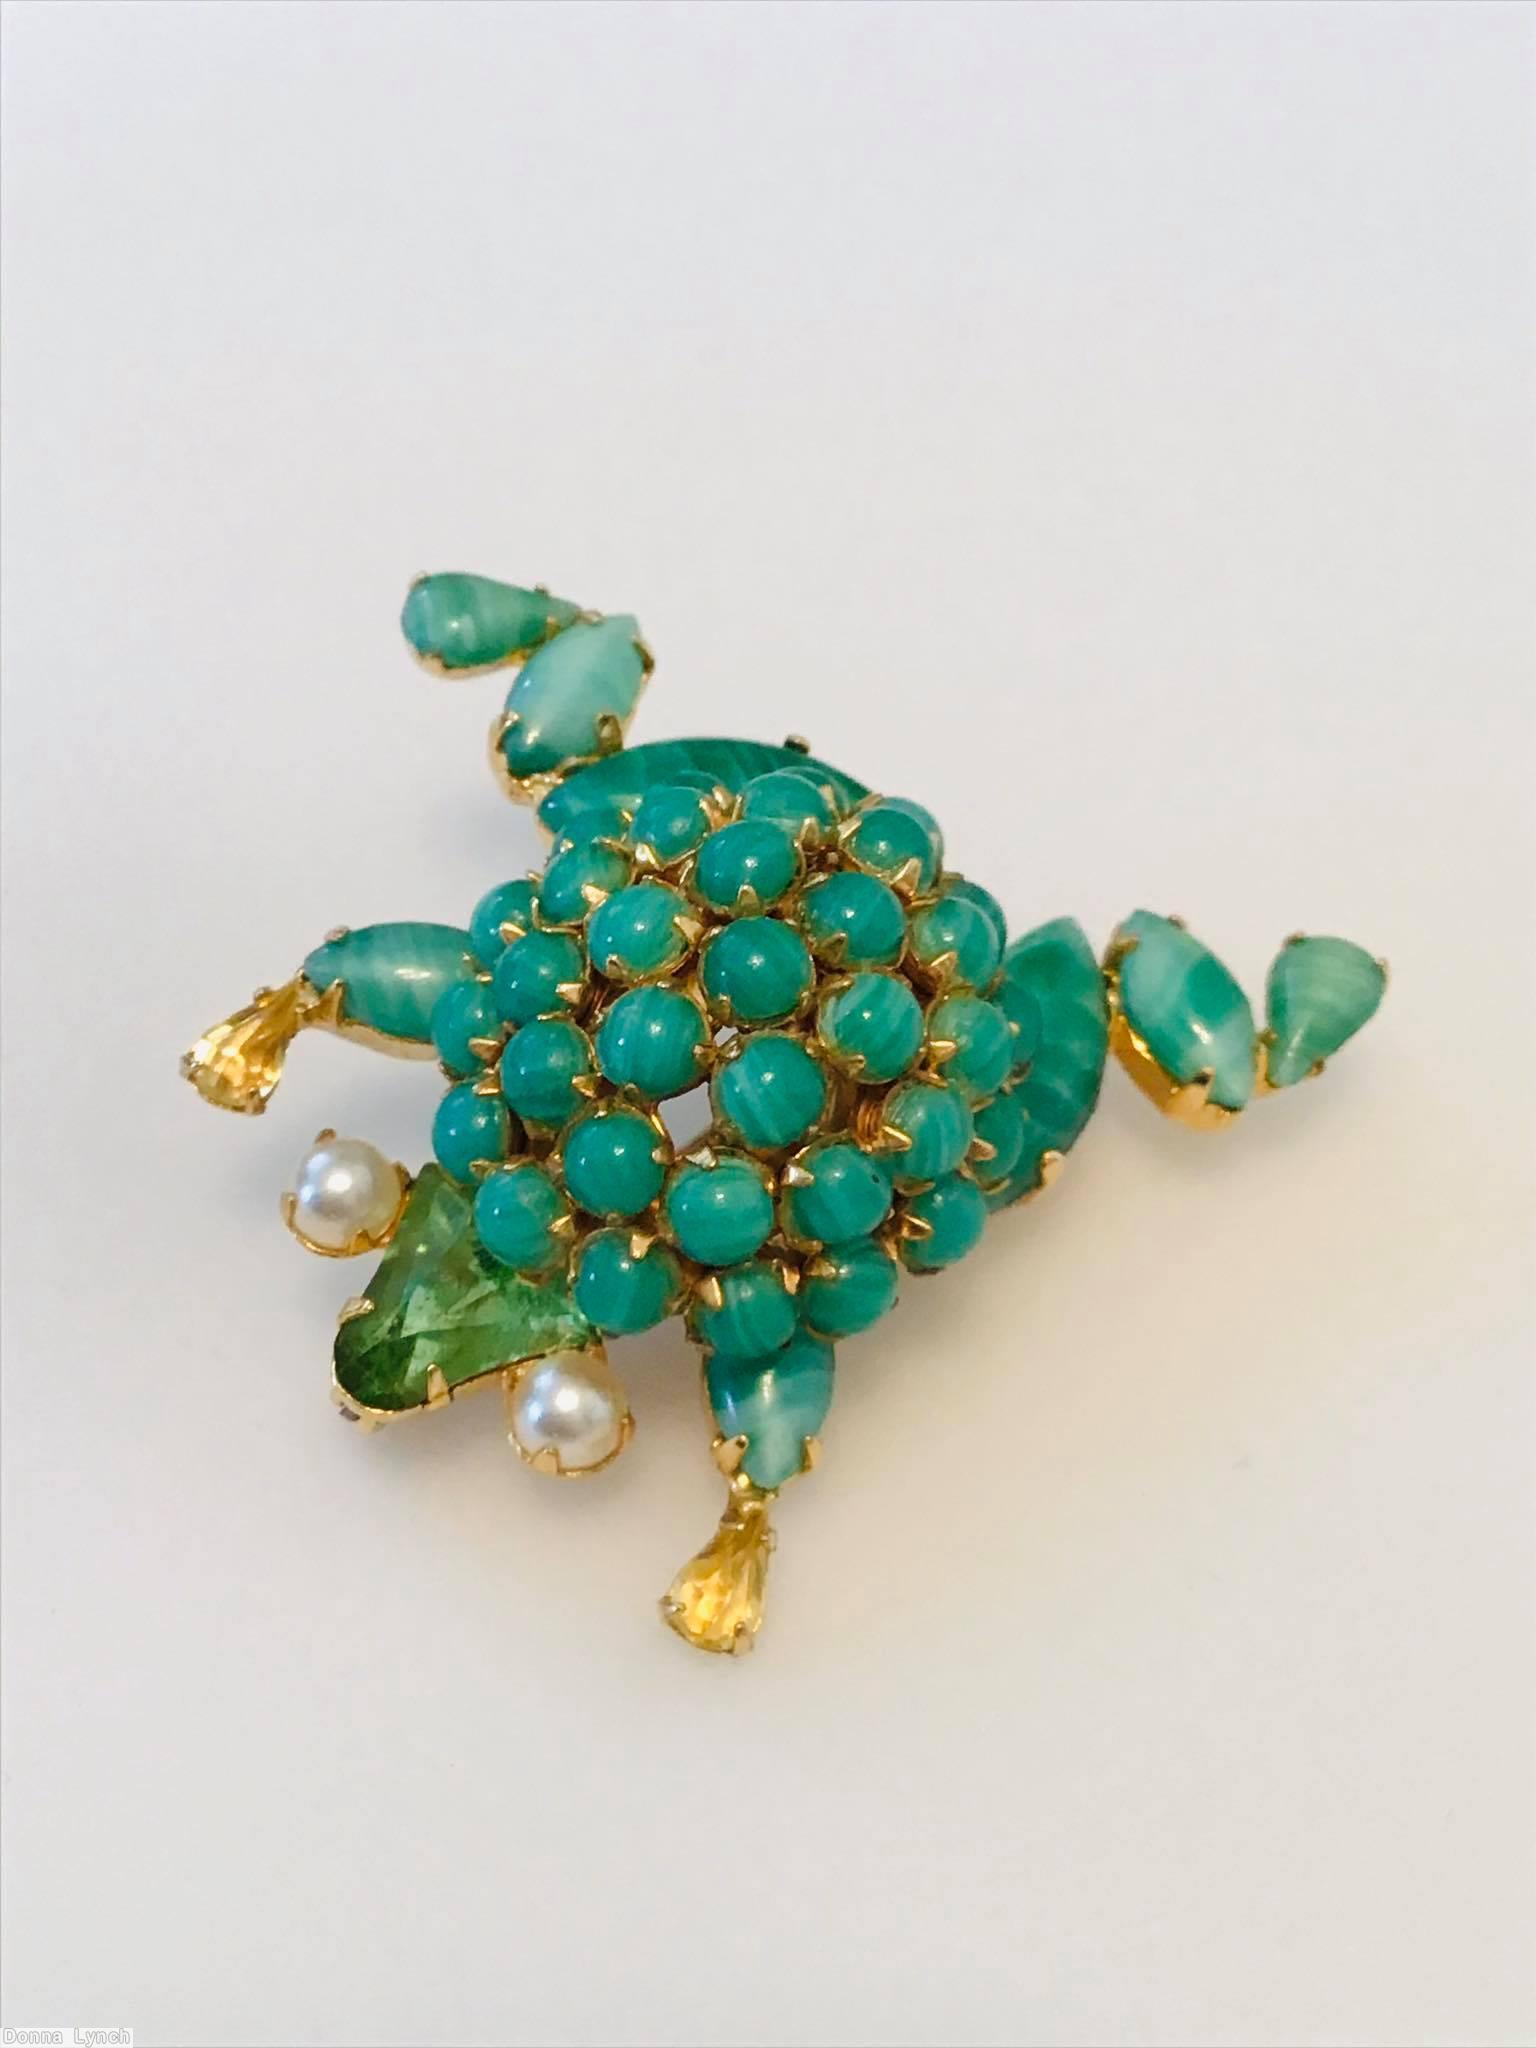 Schreiner frog peking glass faux pearl amber teardrop green goldtone jewelry